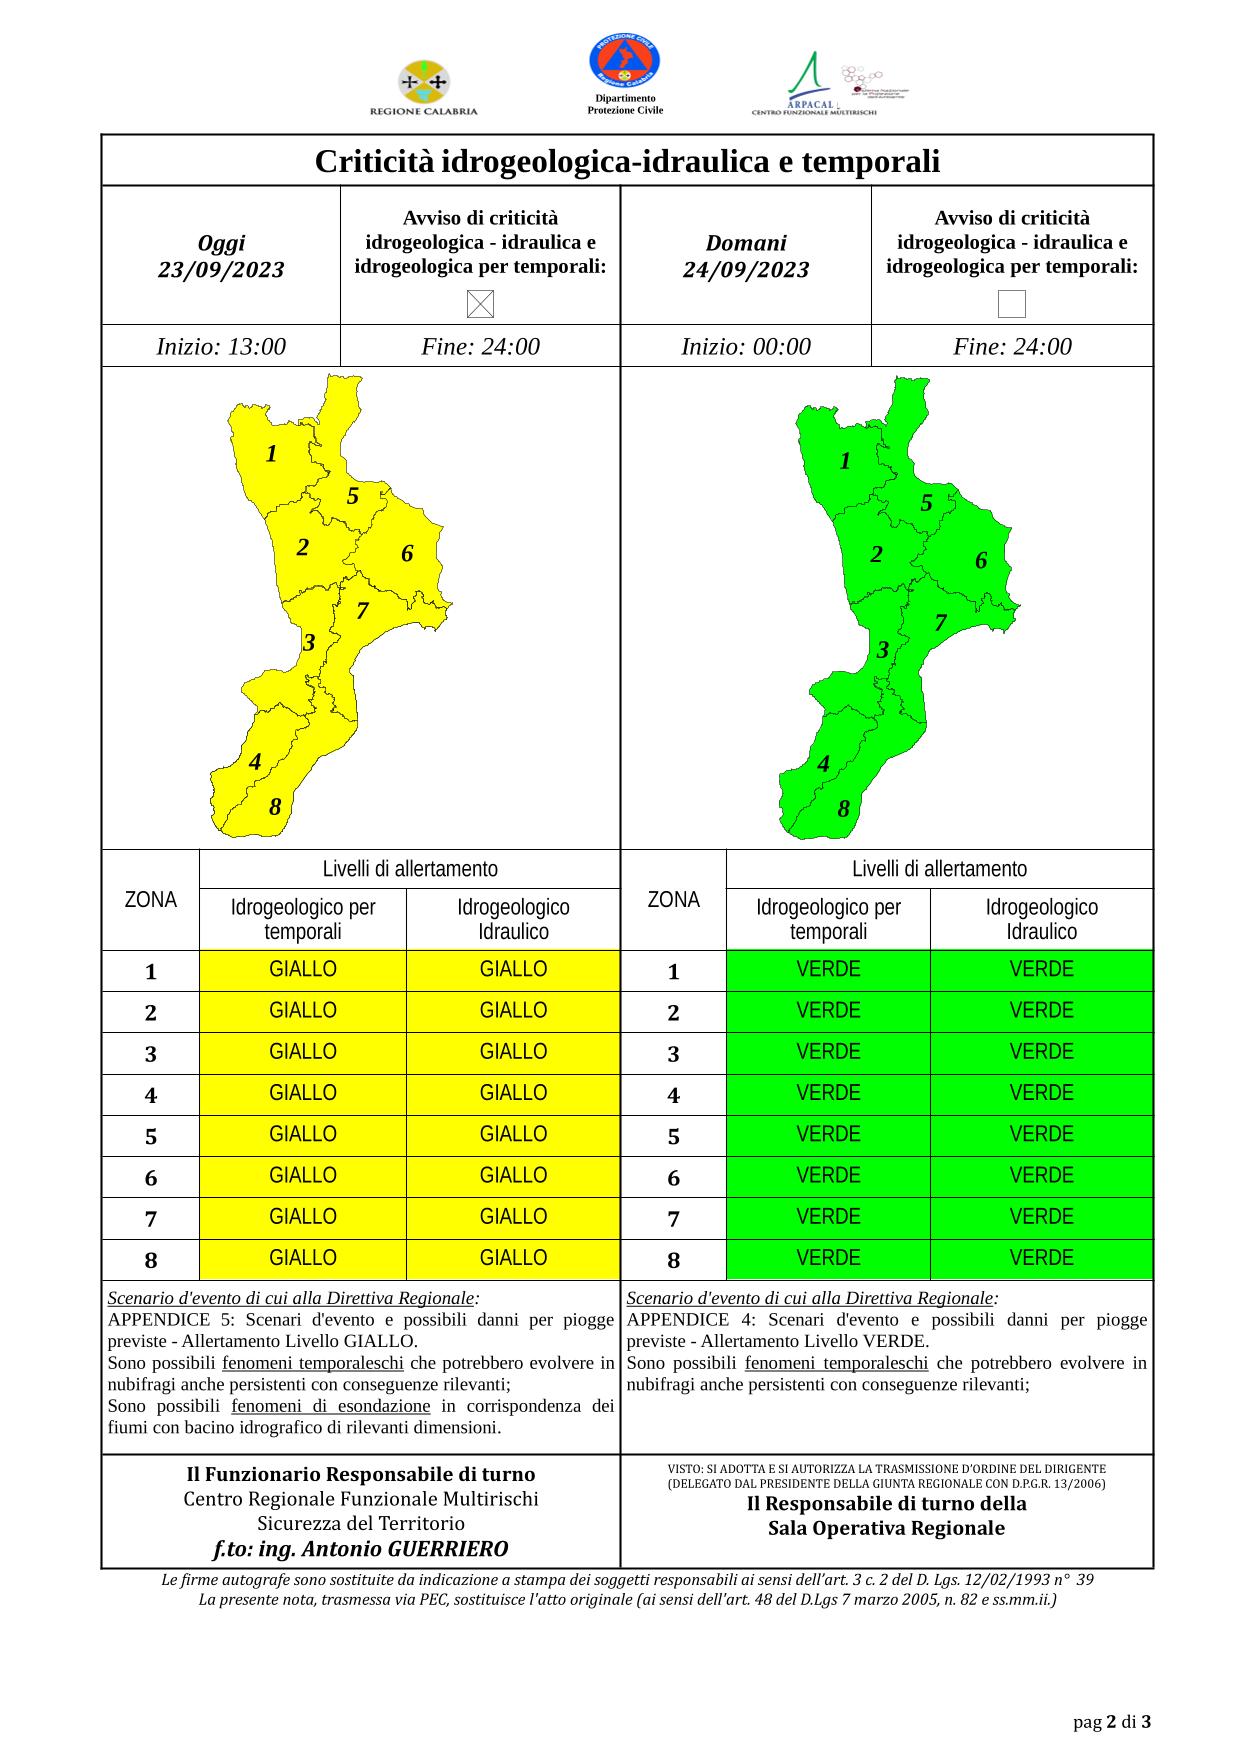 Criticità idrogeologica-idraulica e temporali in Calabria 23-09-2023